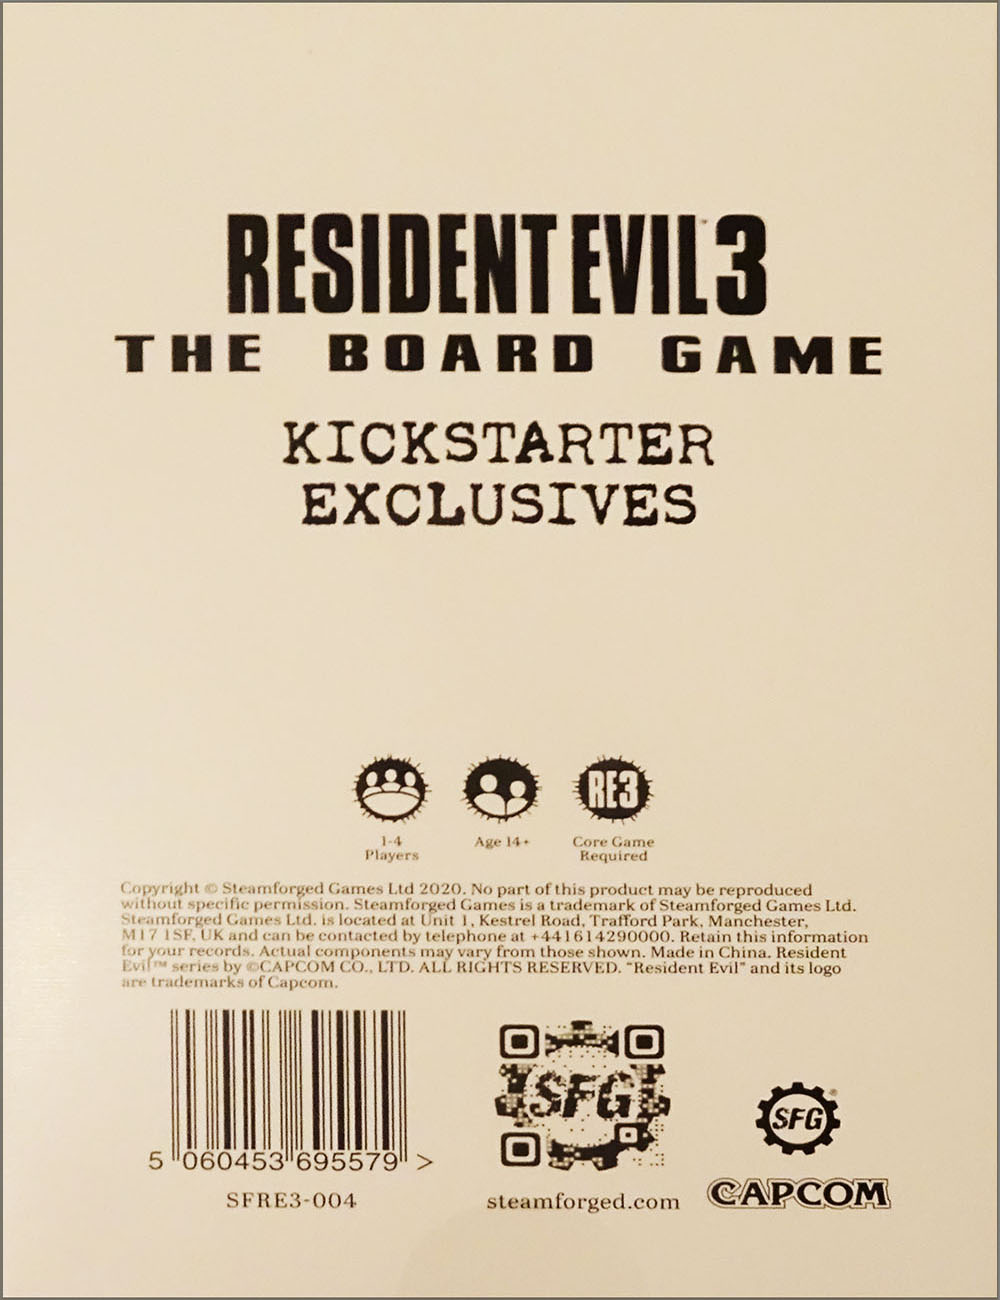 Resident Evil 3 Kickstarter Exclusives Expansion